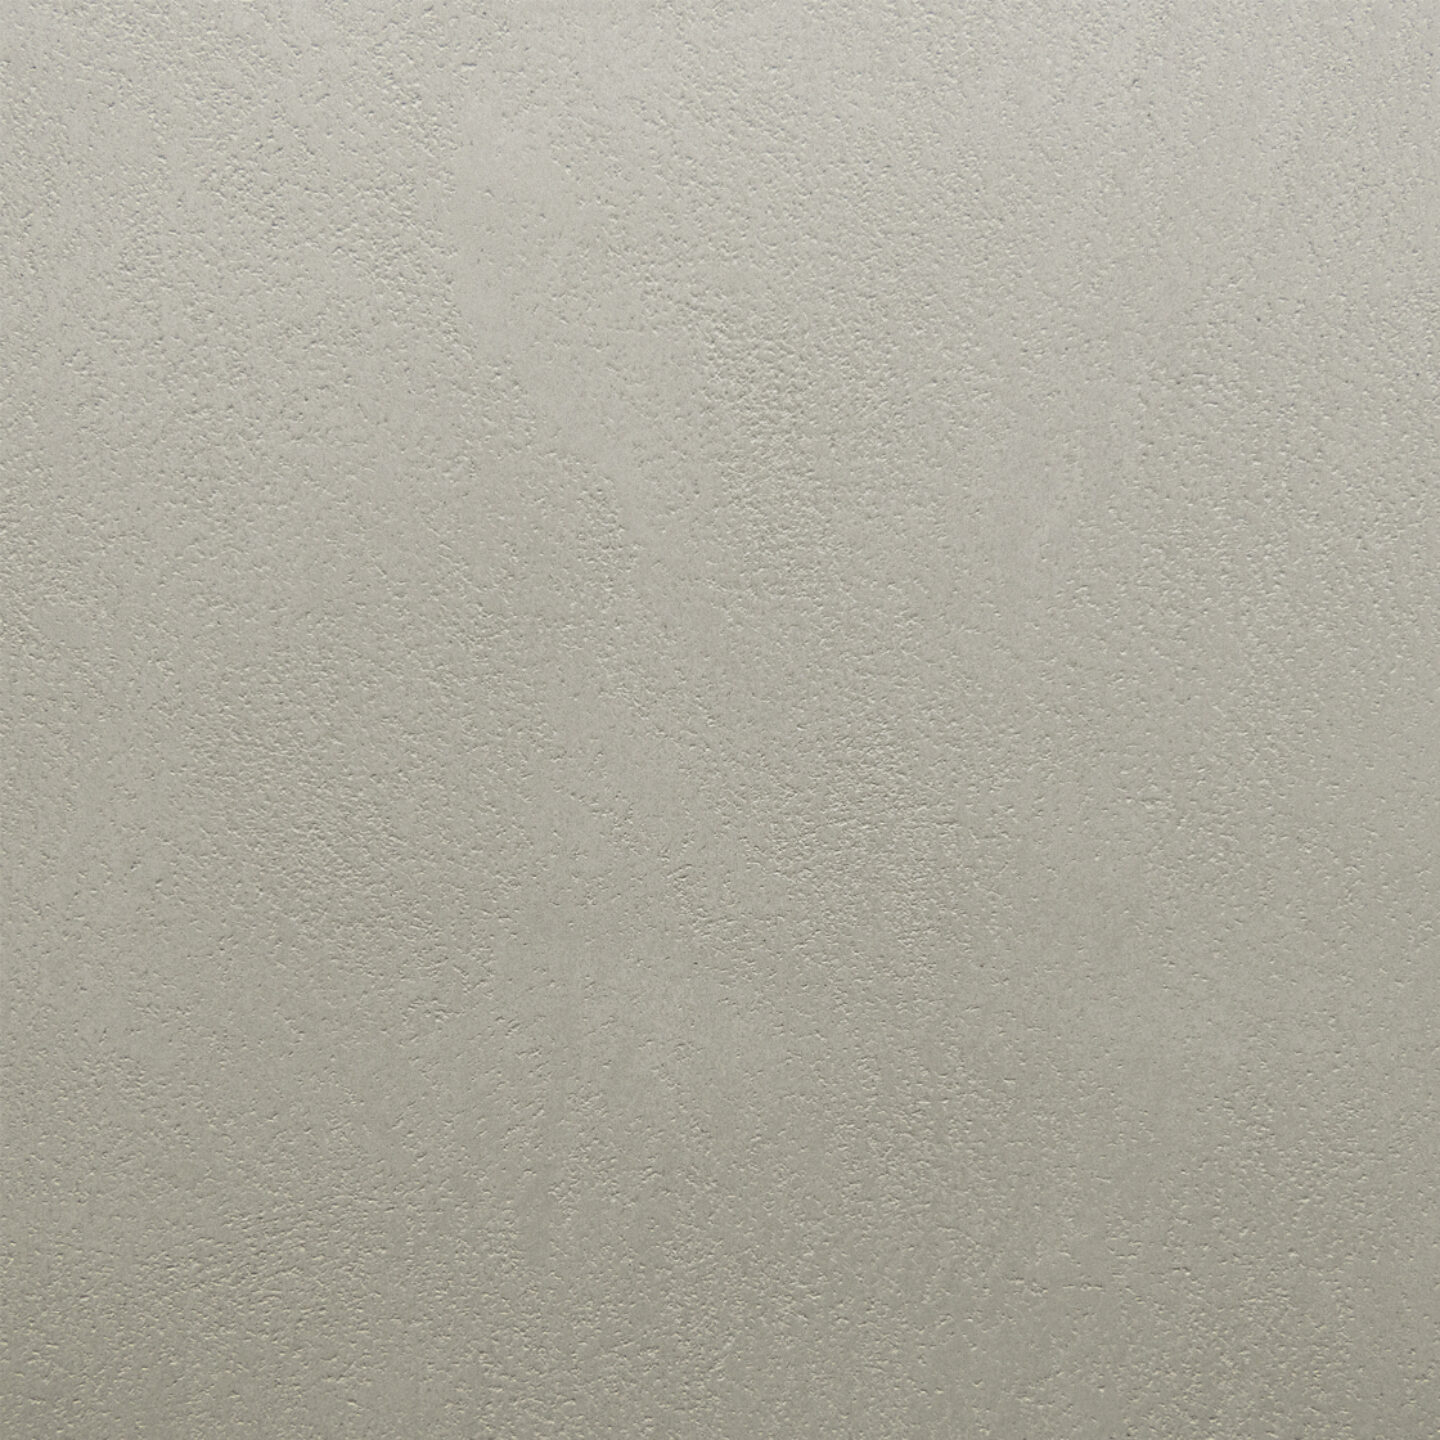 Close up of Armourcoat leatherstone exterior polished plaster finish - 18